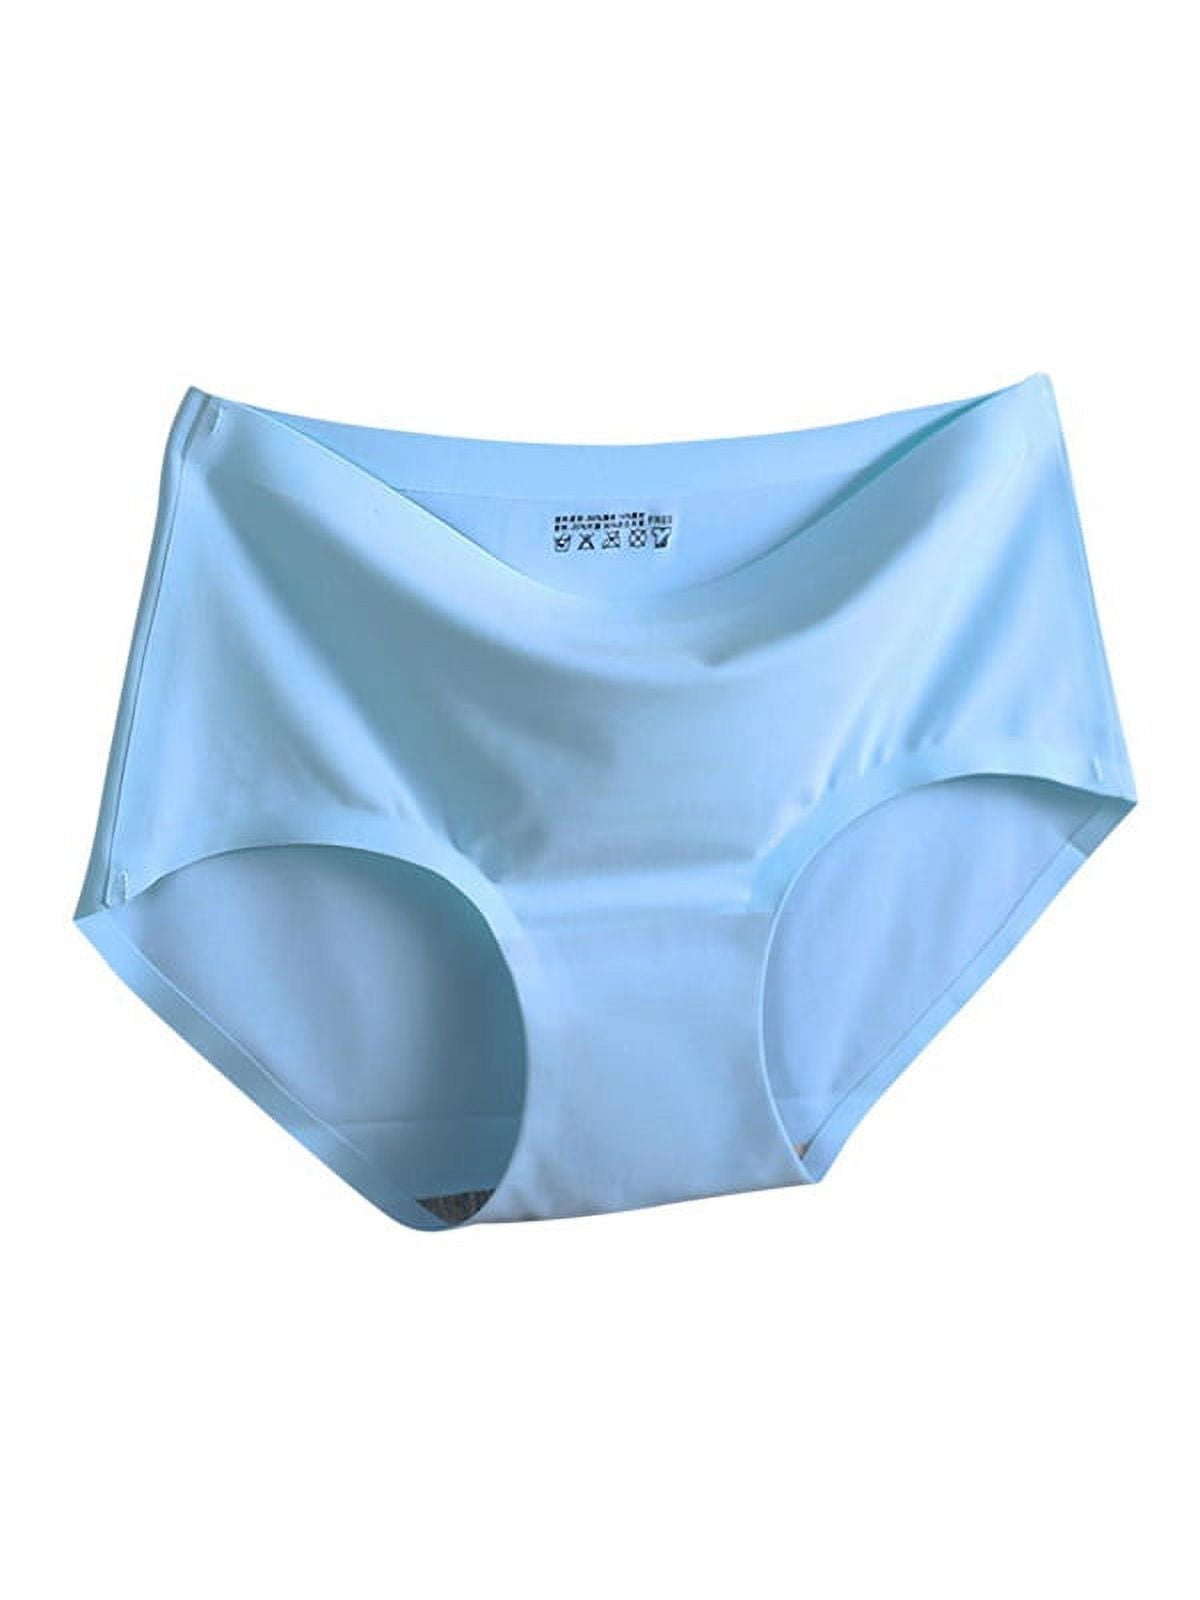 Seamless Panties For Women Ice Silk